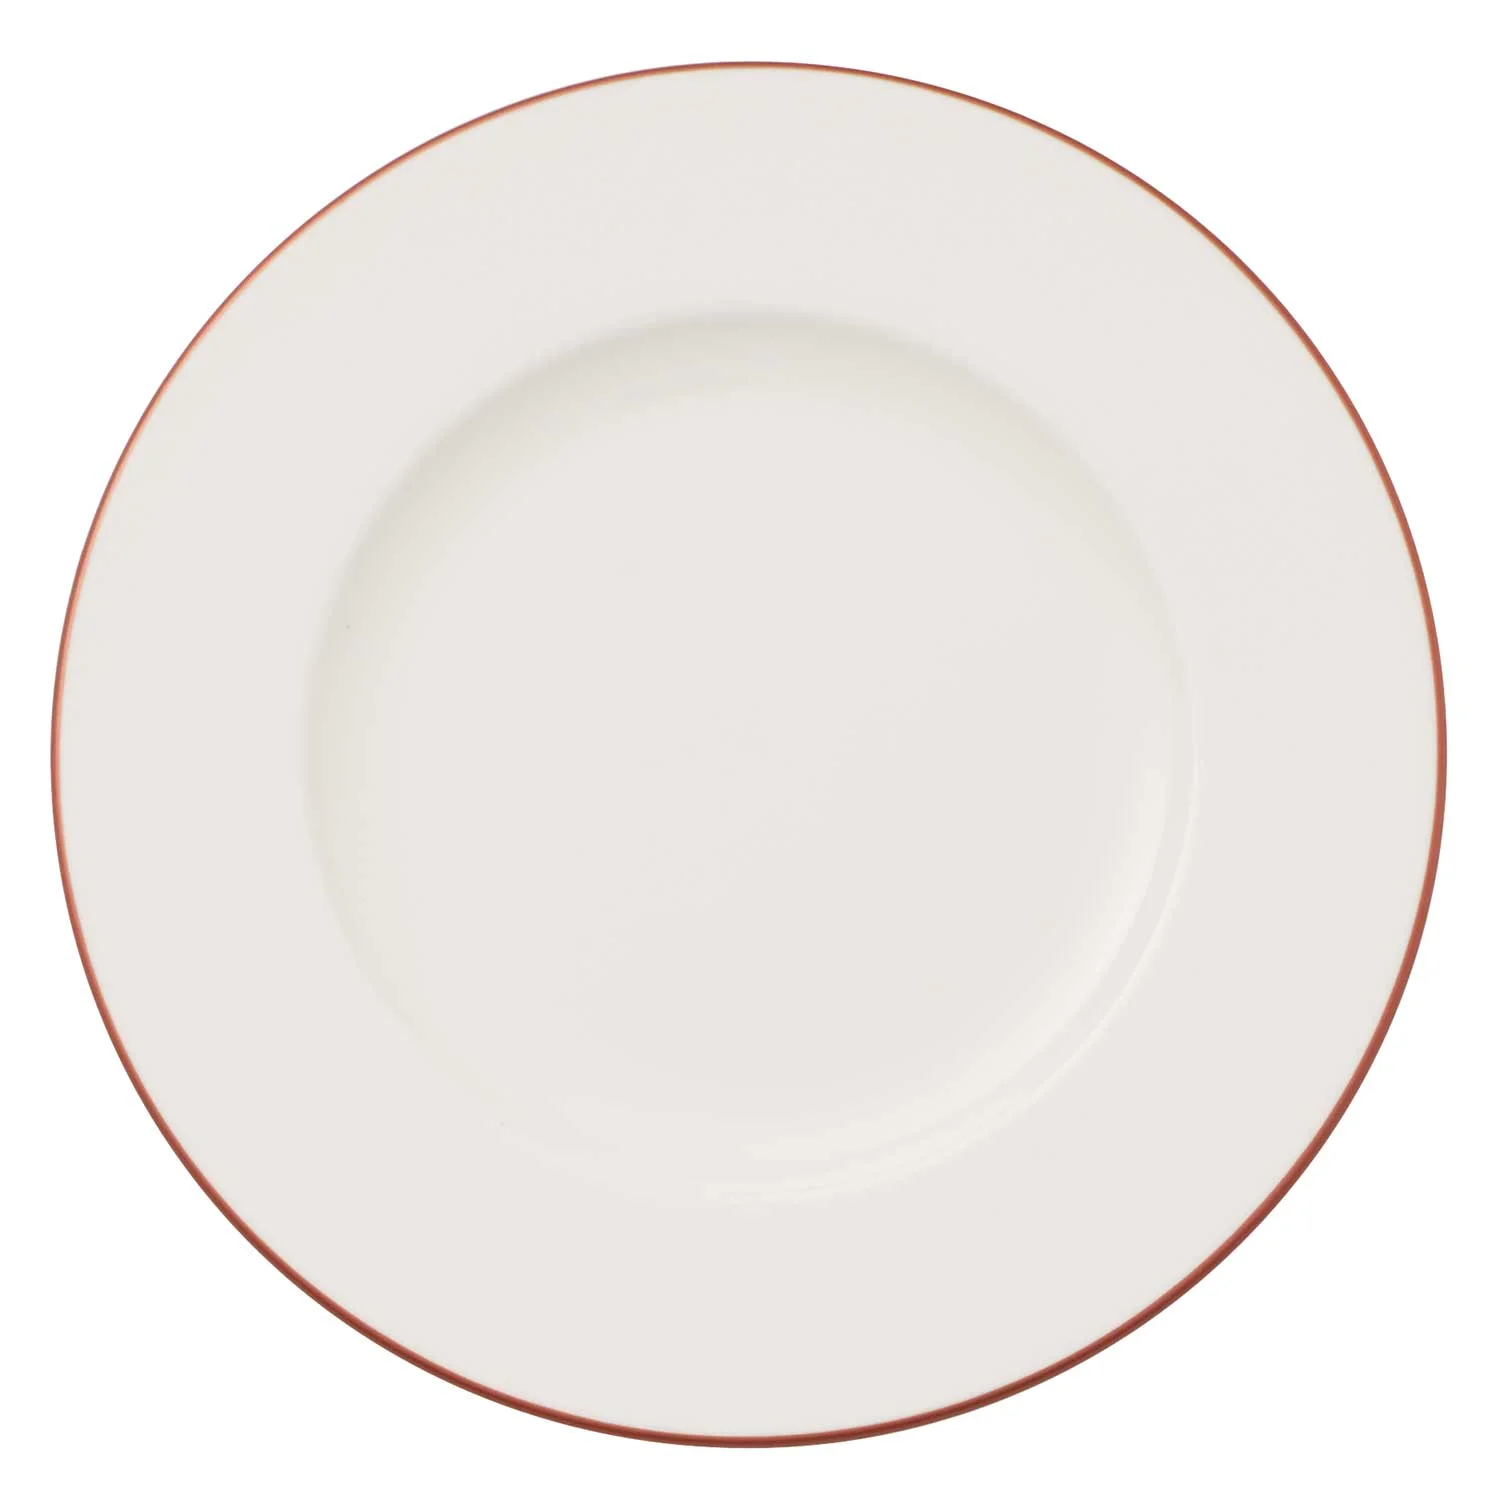 Anmut Rosewood Пирожковая тарелка 16 см